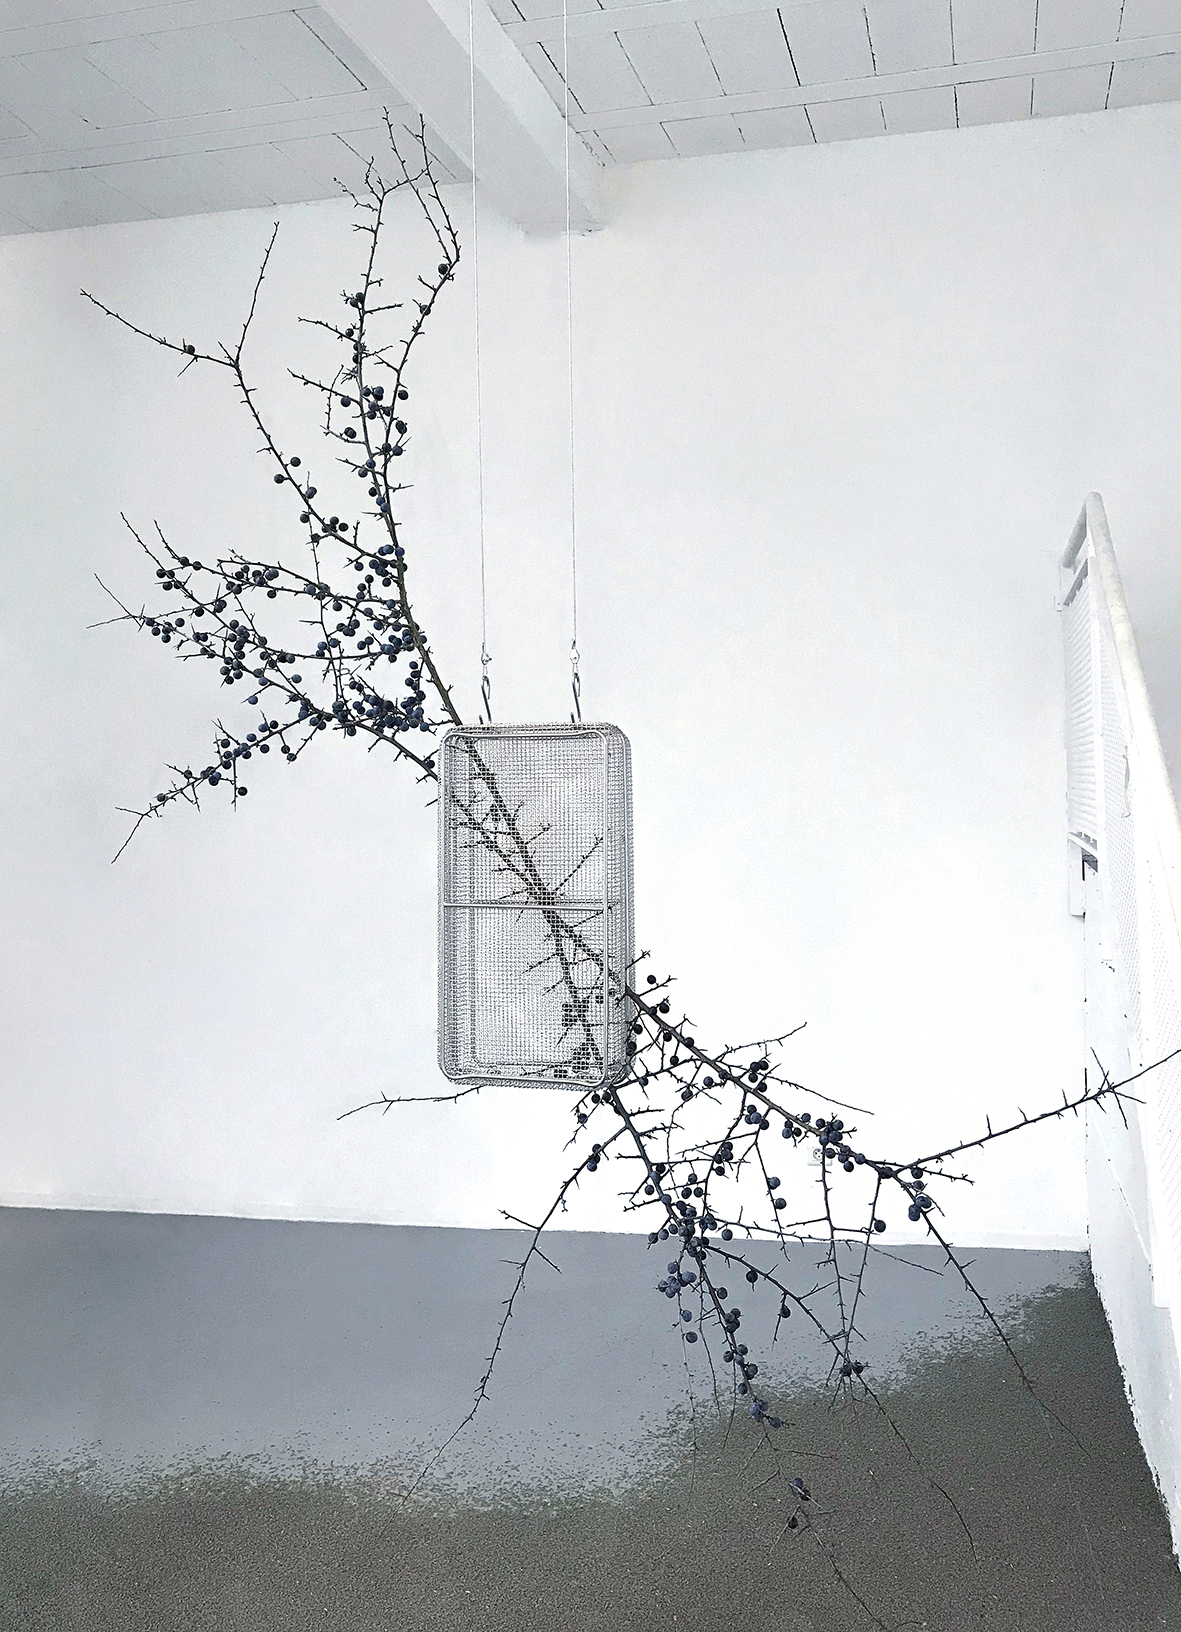 Floryan Varennes, Gothic, my love, 2020, Medical sterilization bins, black thorns (Prunus spinosa), medical hooks, cables,  220  x 190 cm